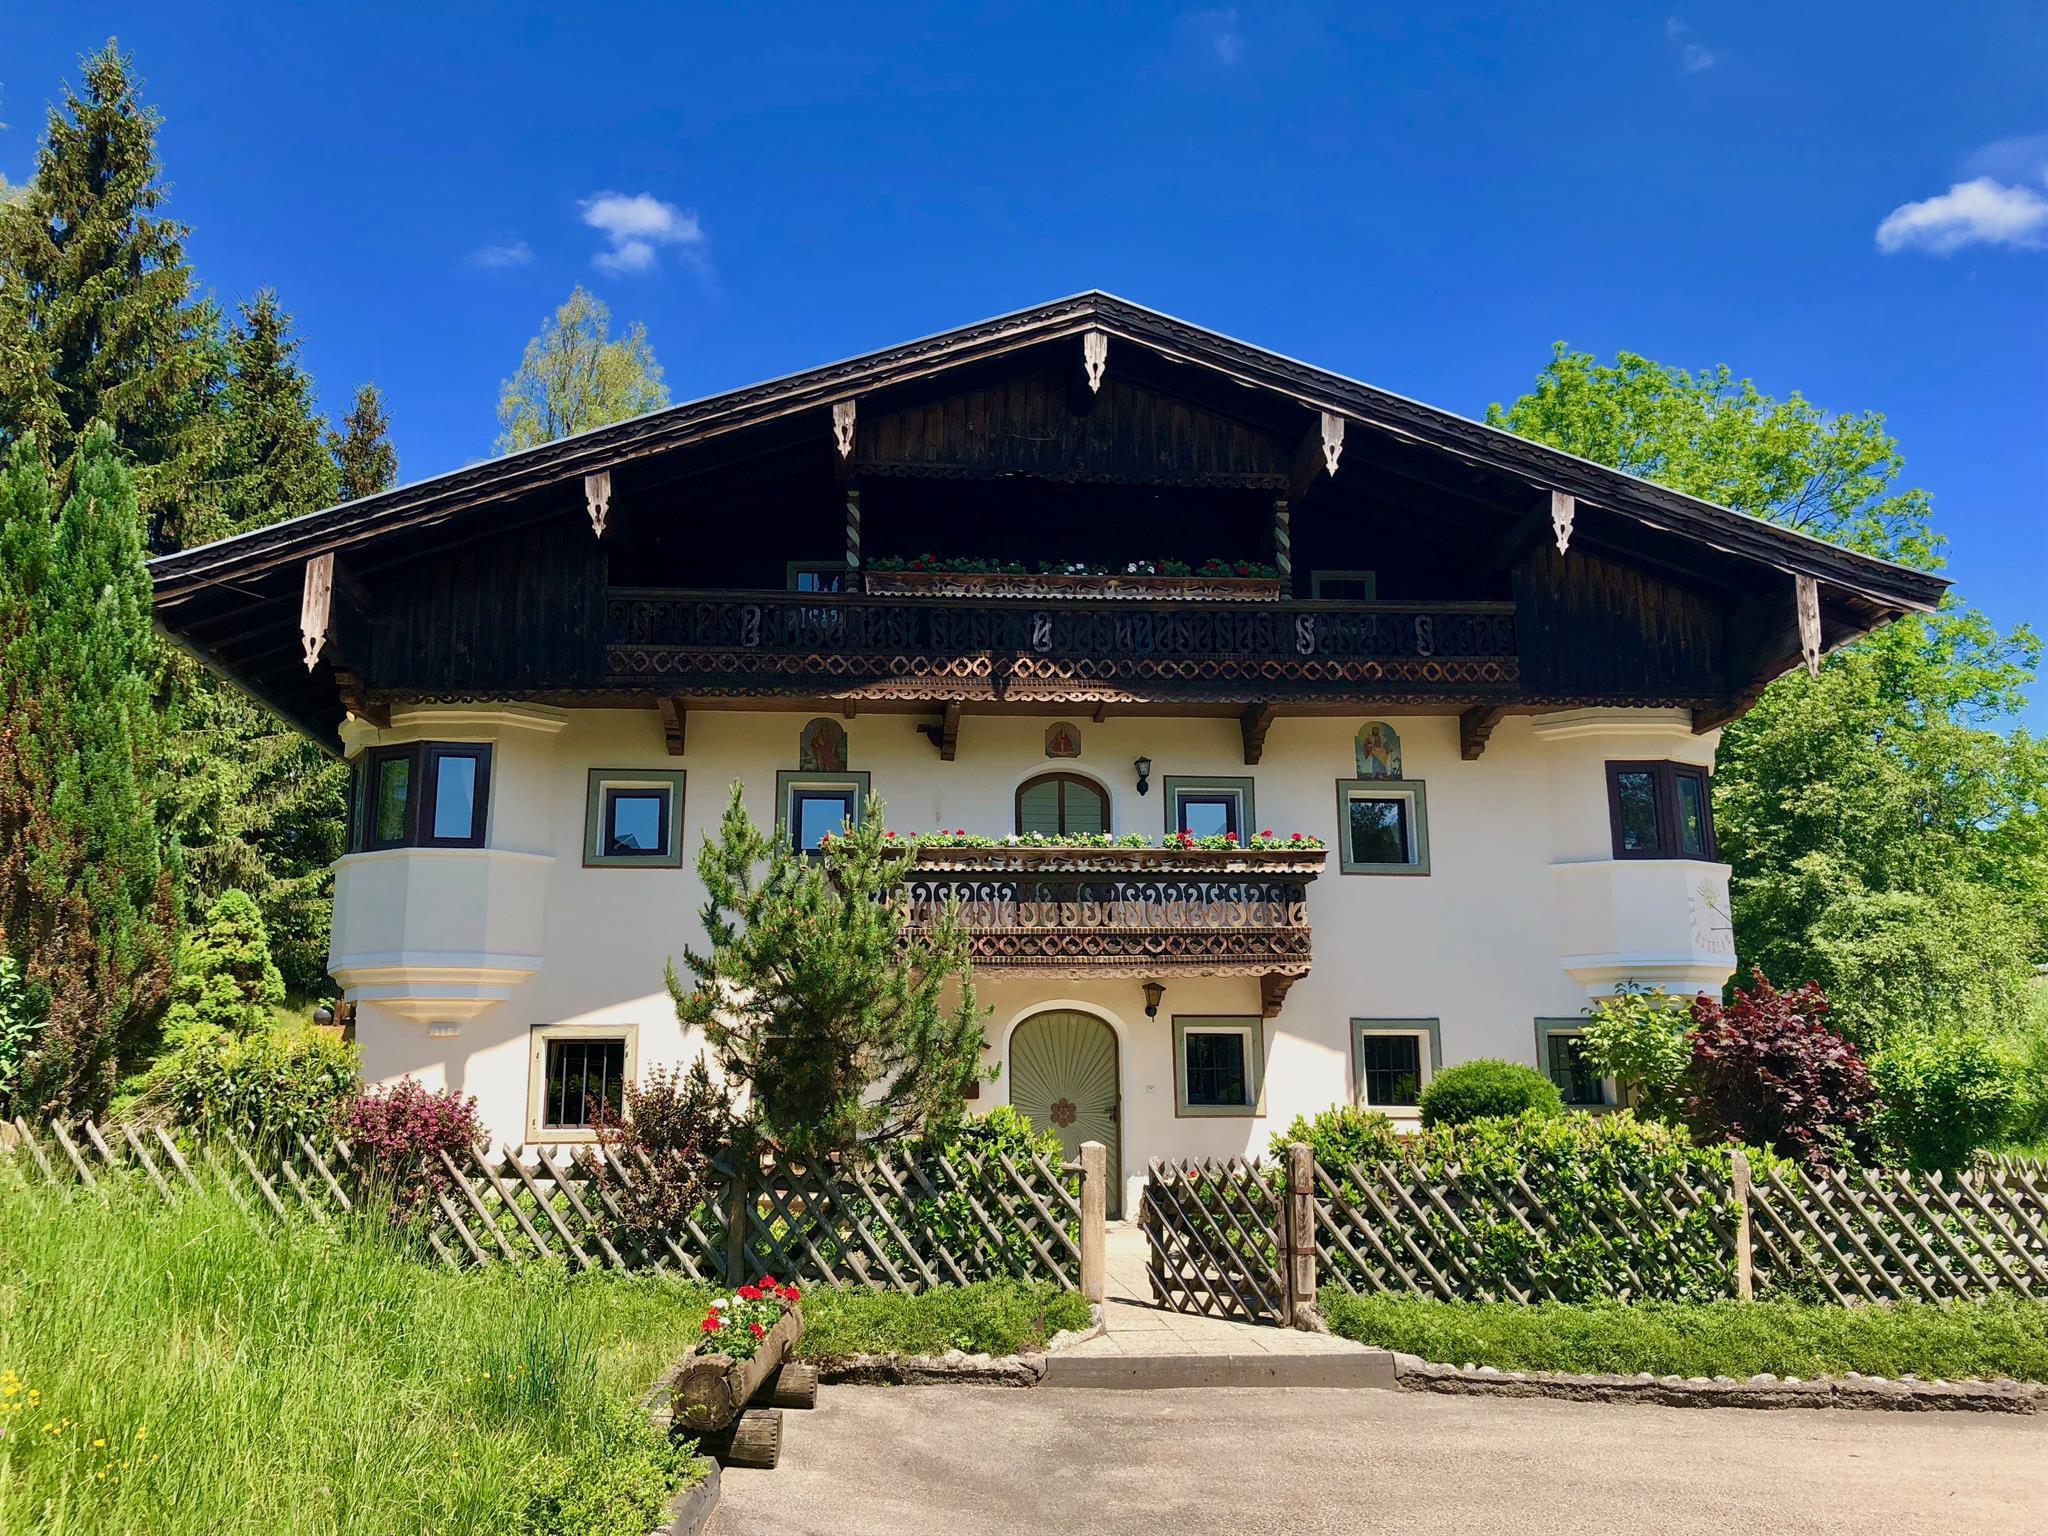 Bauernhaus-Schloss Wagrain Ferienhaus, Toilette un Ferienhaus  Tirol